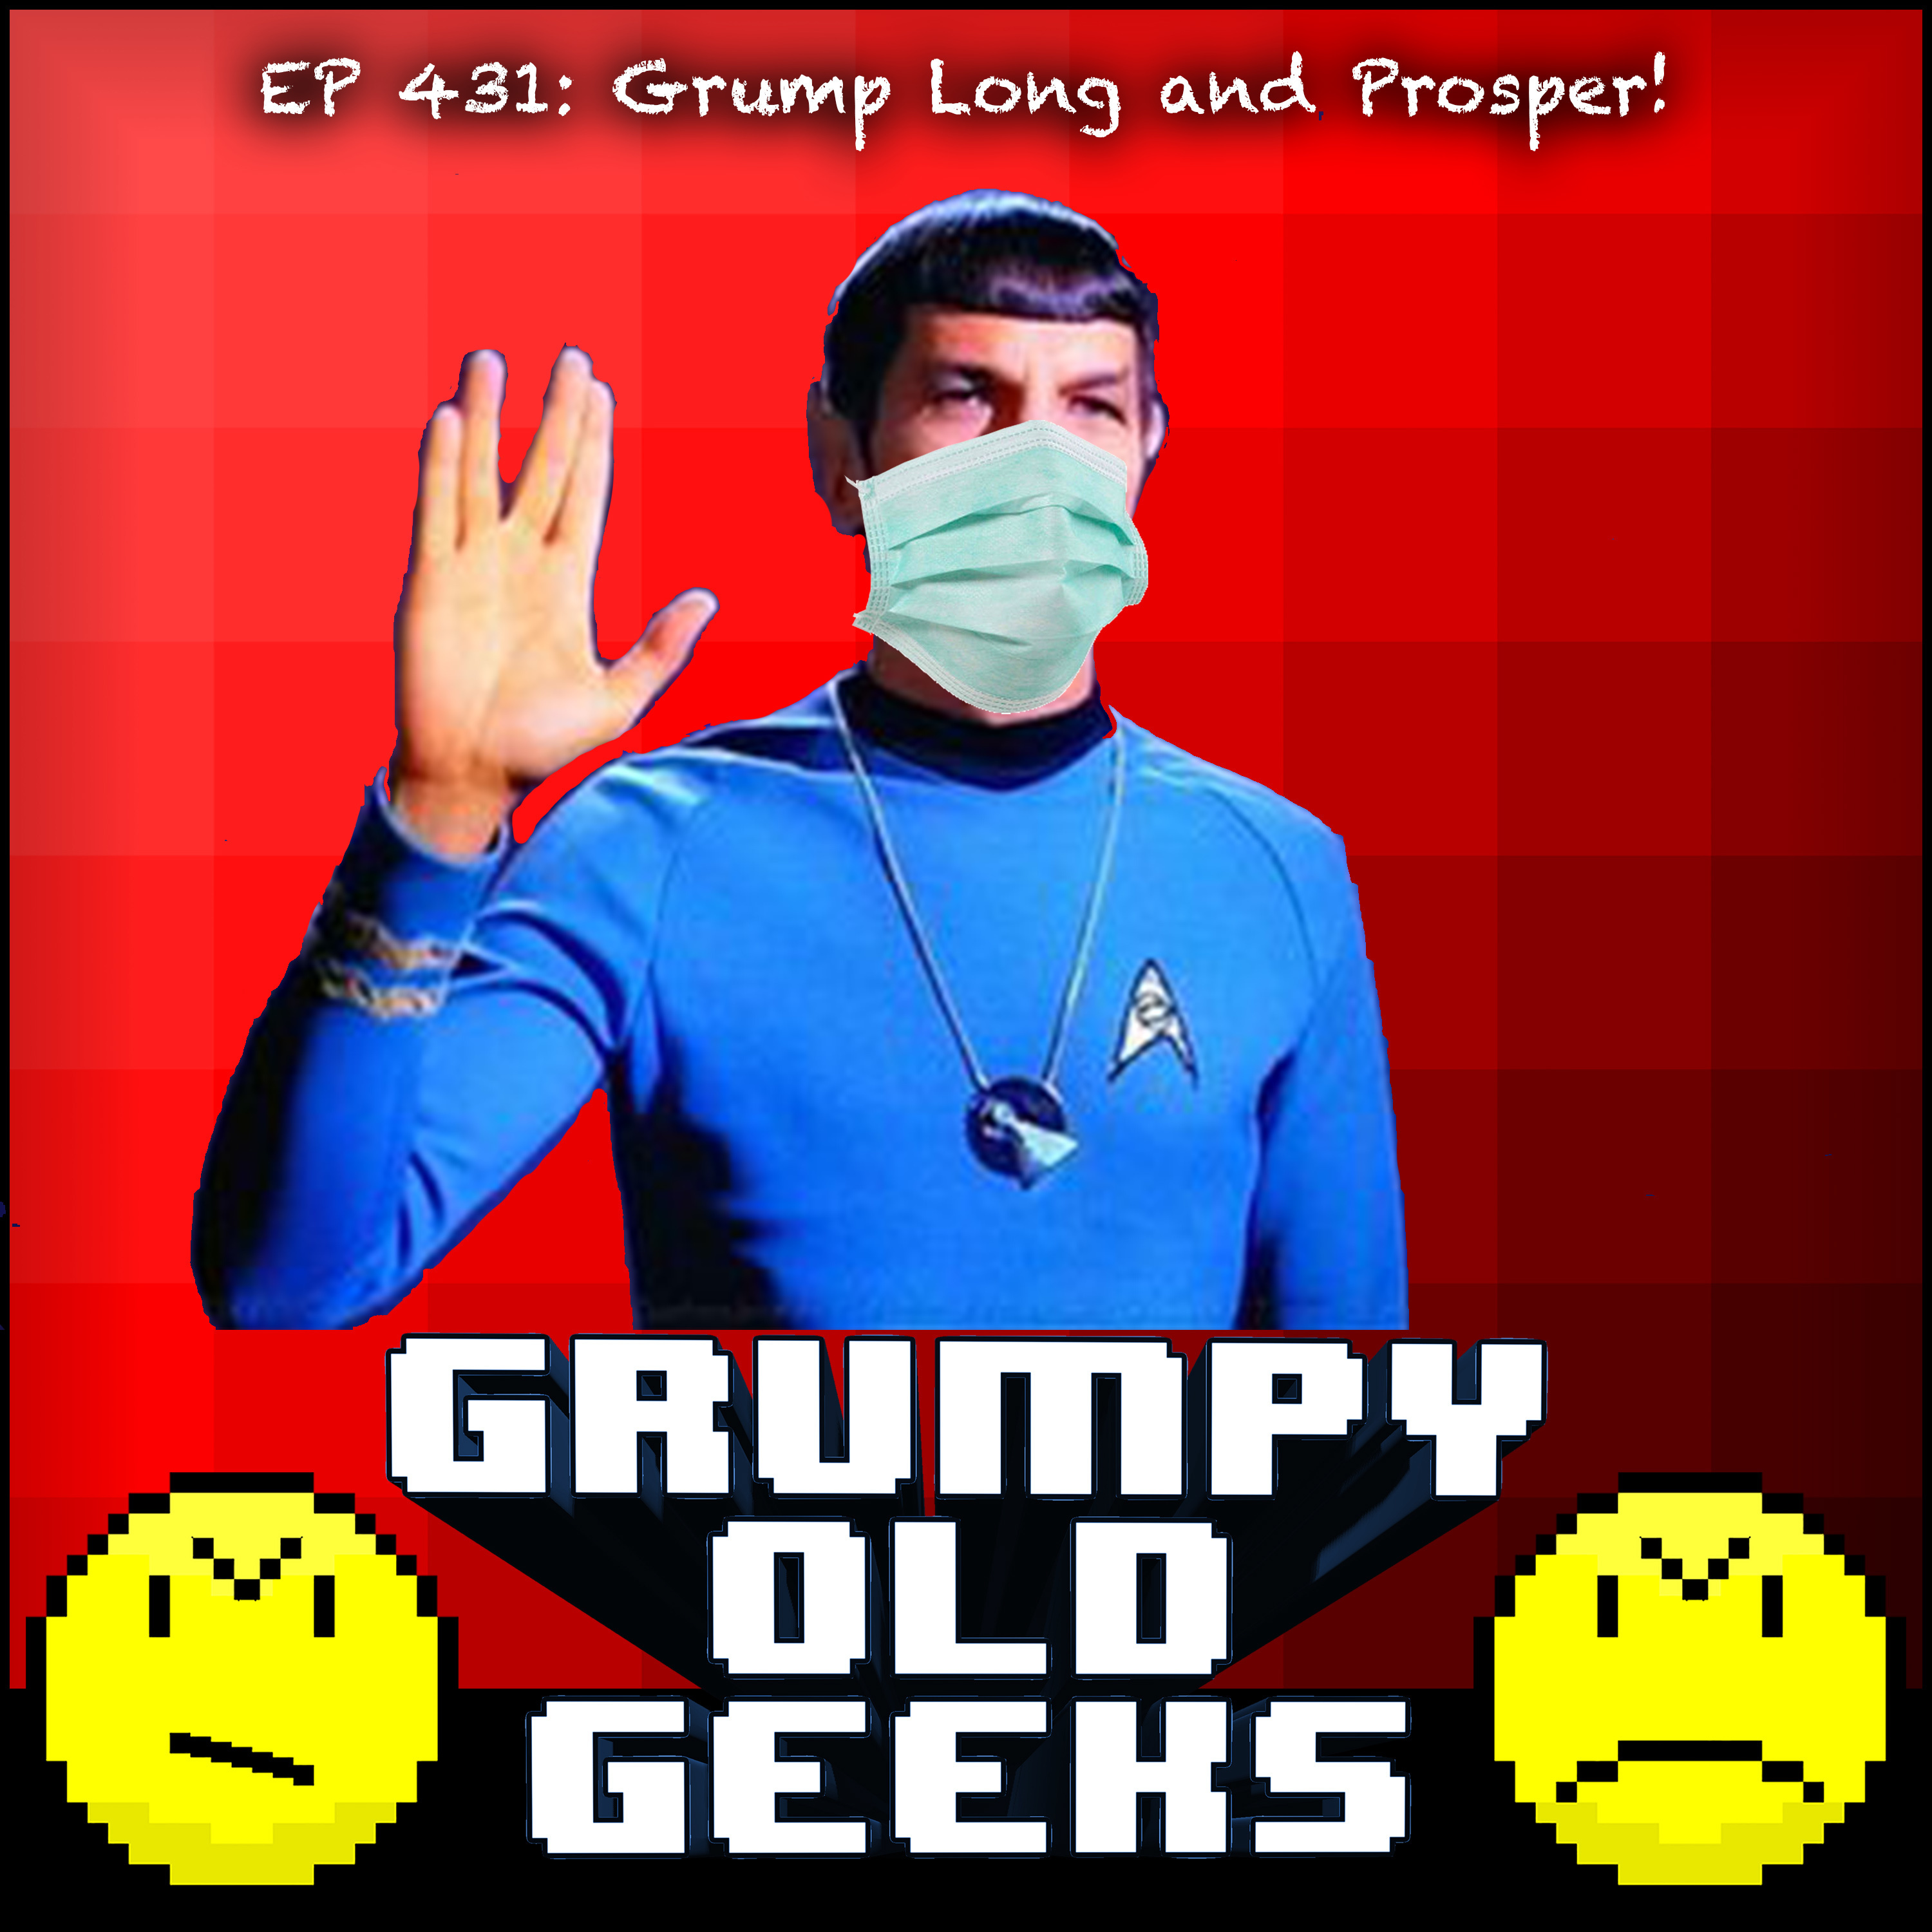 431: Grump Long and Prosper! Image